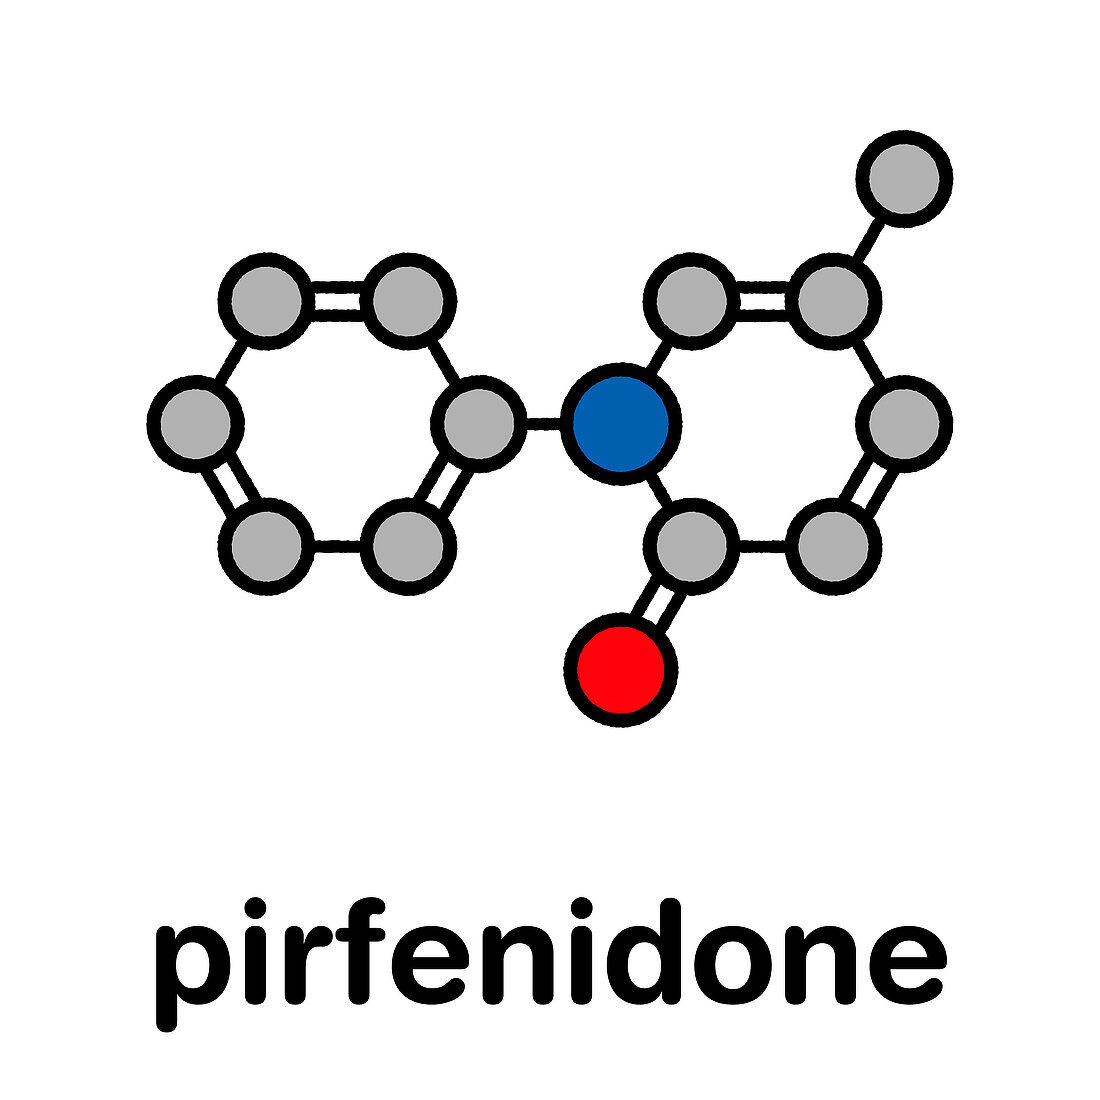 Pirfenidone idiopathic pulmonary fibrosis drug molecule